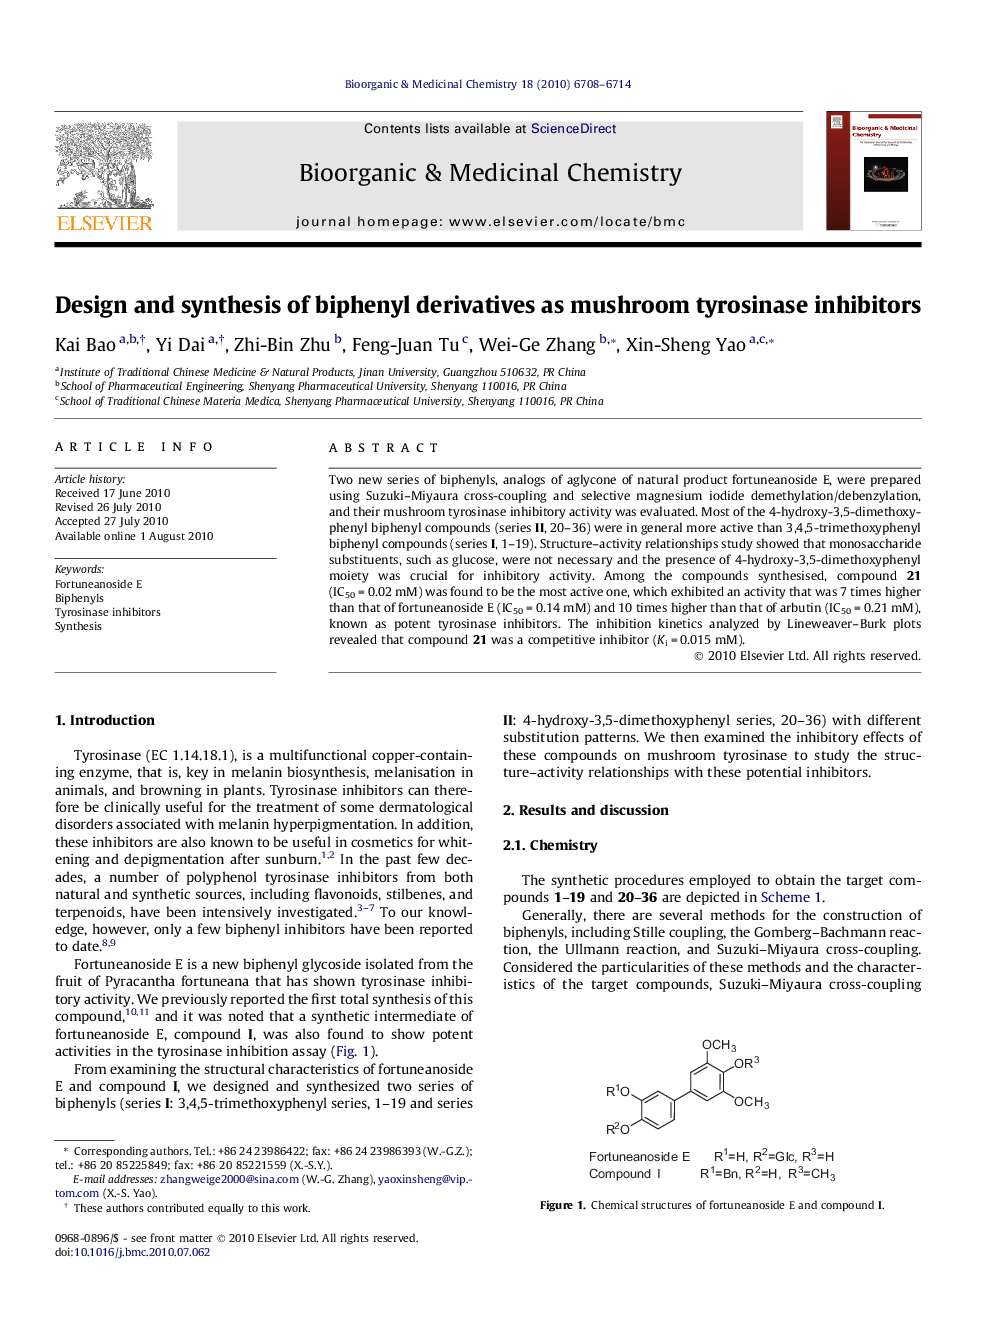 Design and synthesis of biphenyl derivatives as mushroom tyrosinase inhibitors